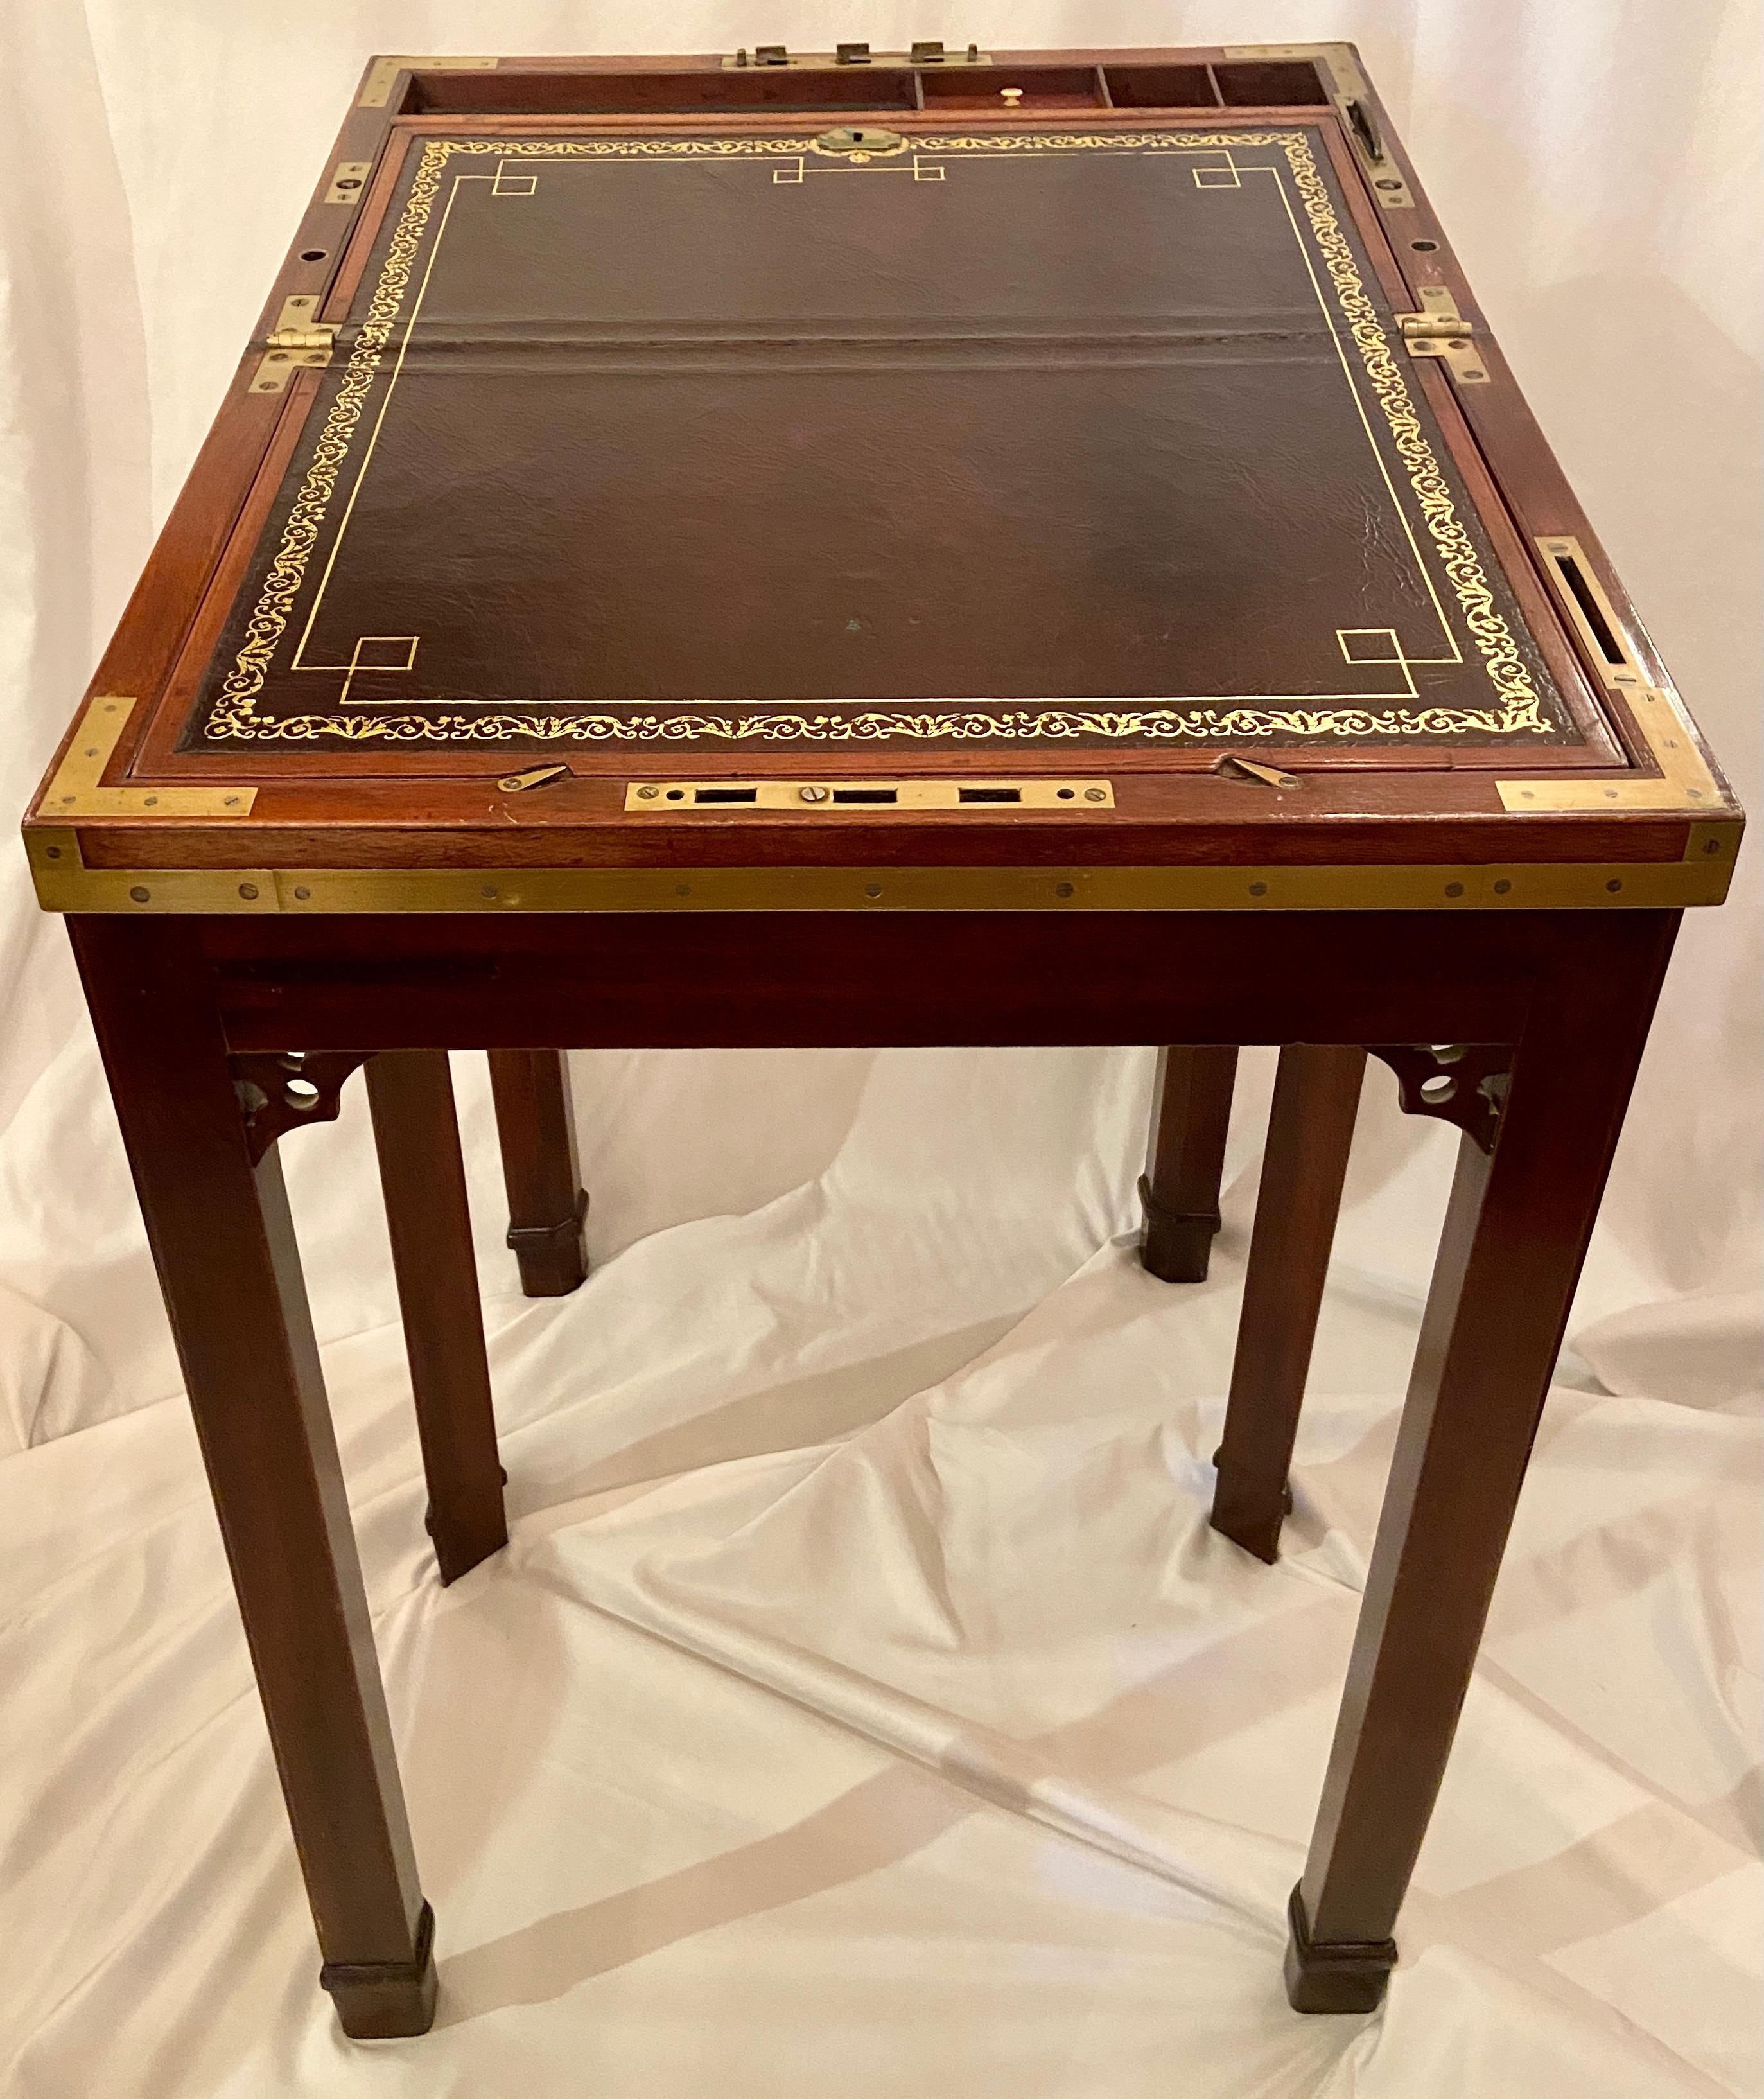 Rare antique english mahogany brass bound travel box, circa 1800.